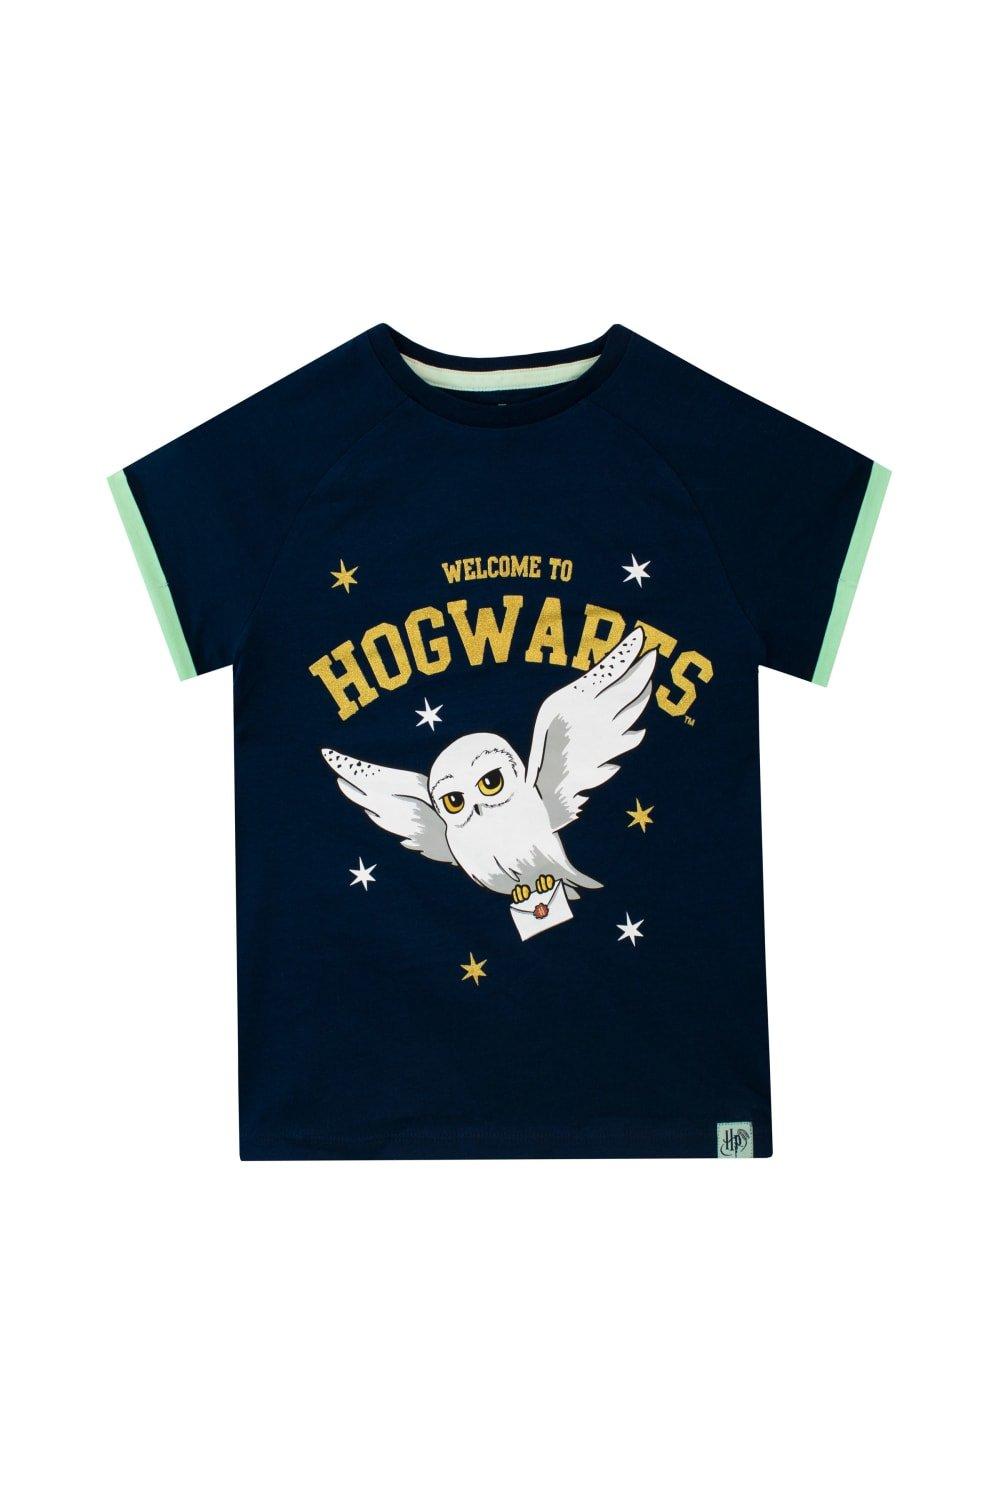 Hogwarts Hedwig T-Shirt